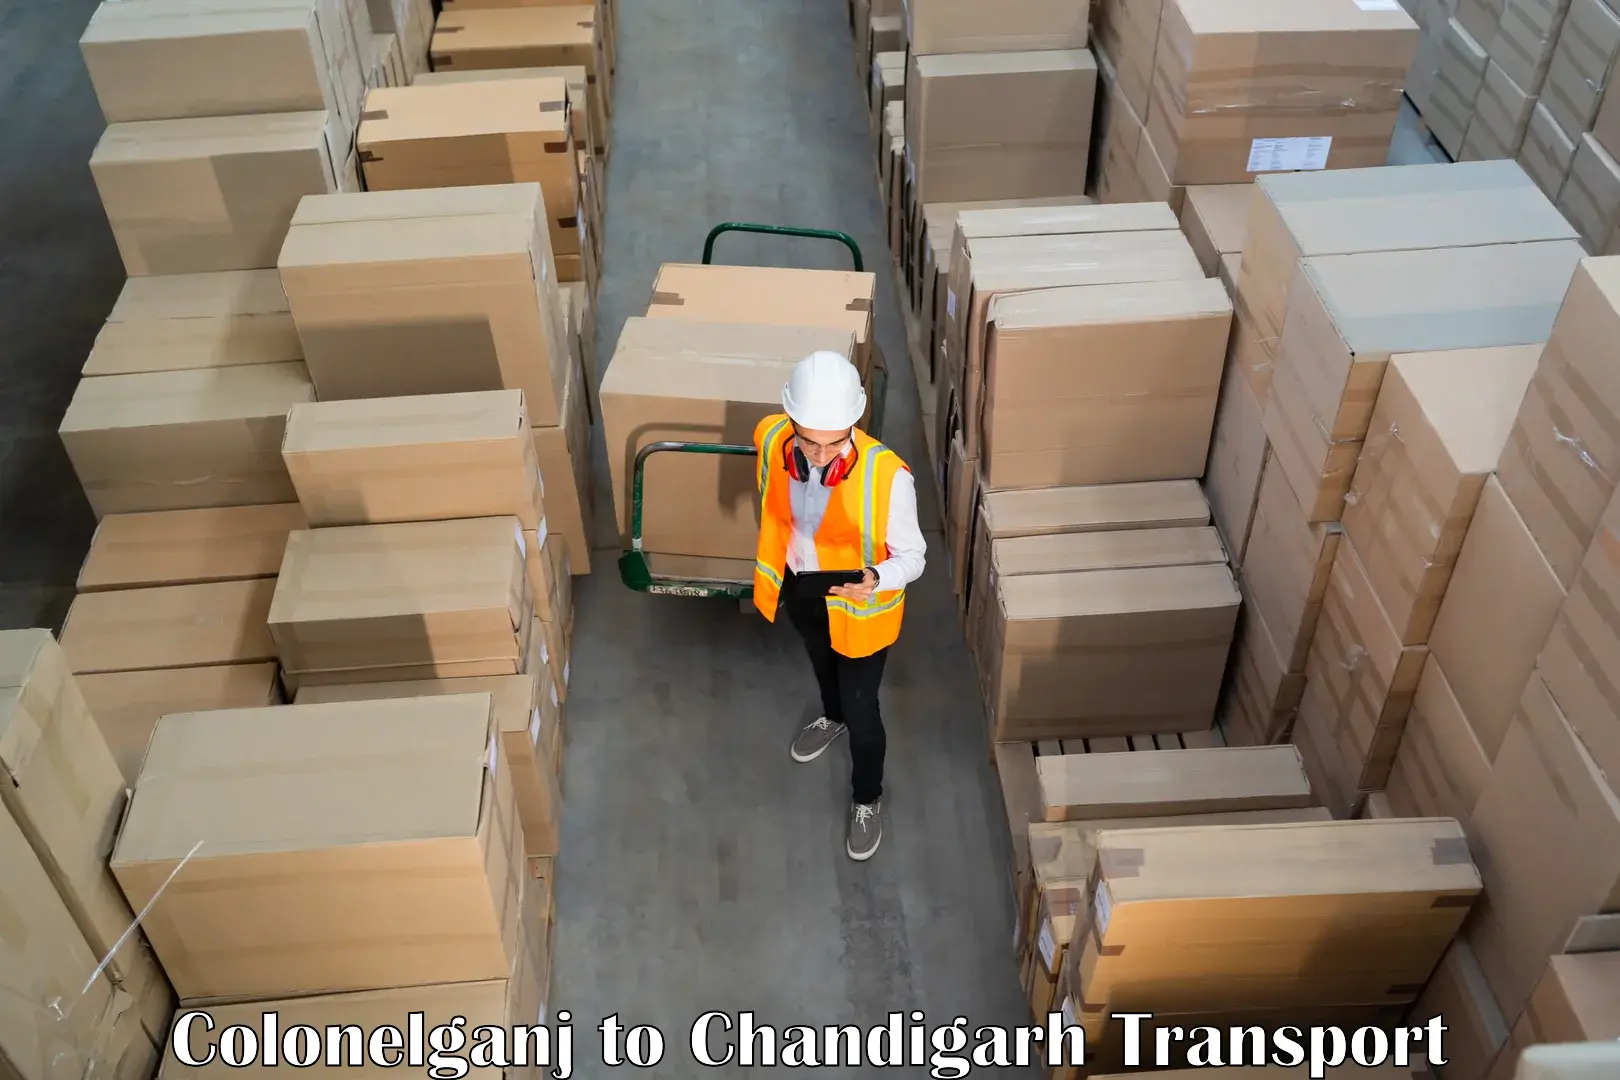 Truck transport companies in India Colonelganj to Chandigarh